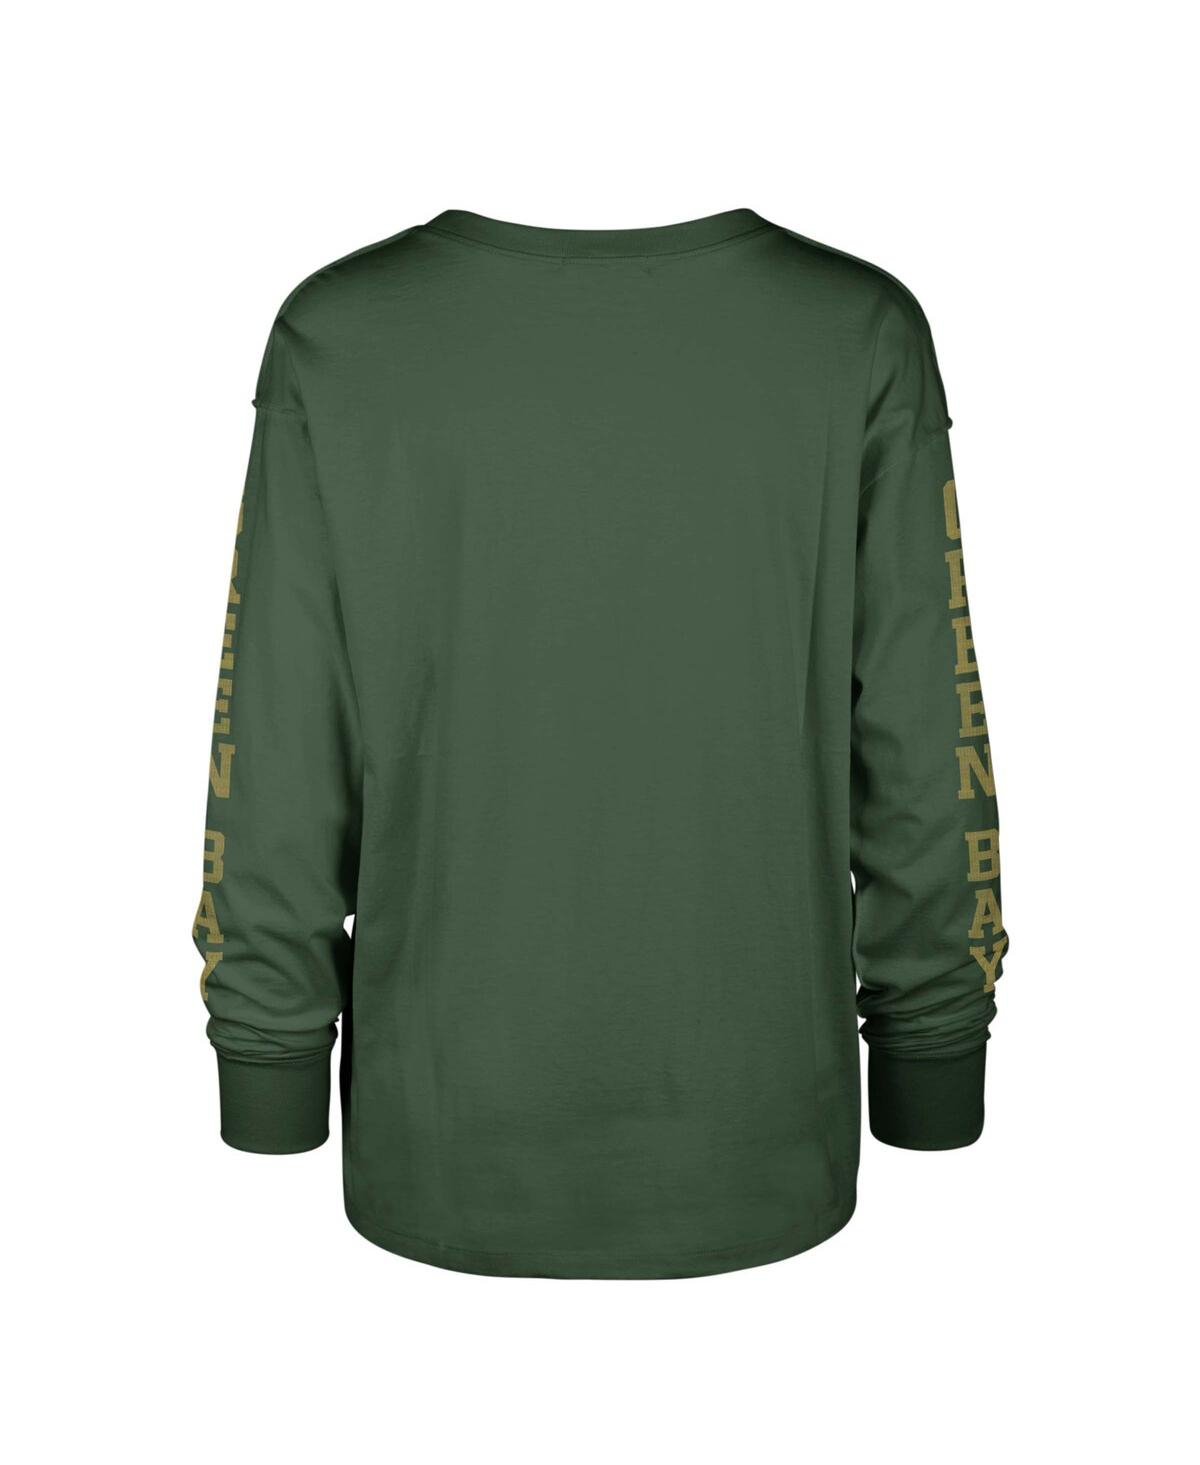 Shop 47 Brand Women's ' Green Distressed Green Bay Packers Tom Cat Long Sleeve T-shirt